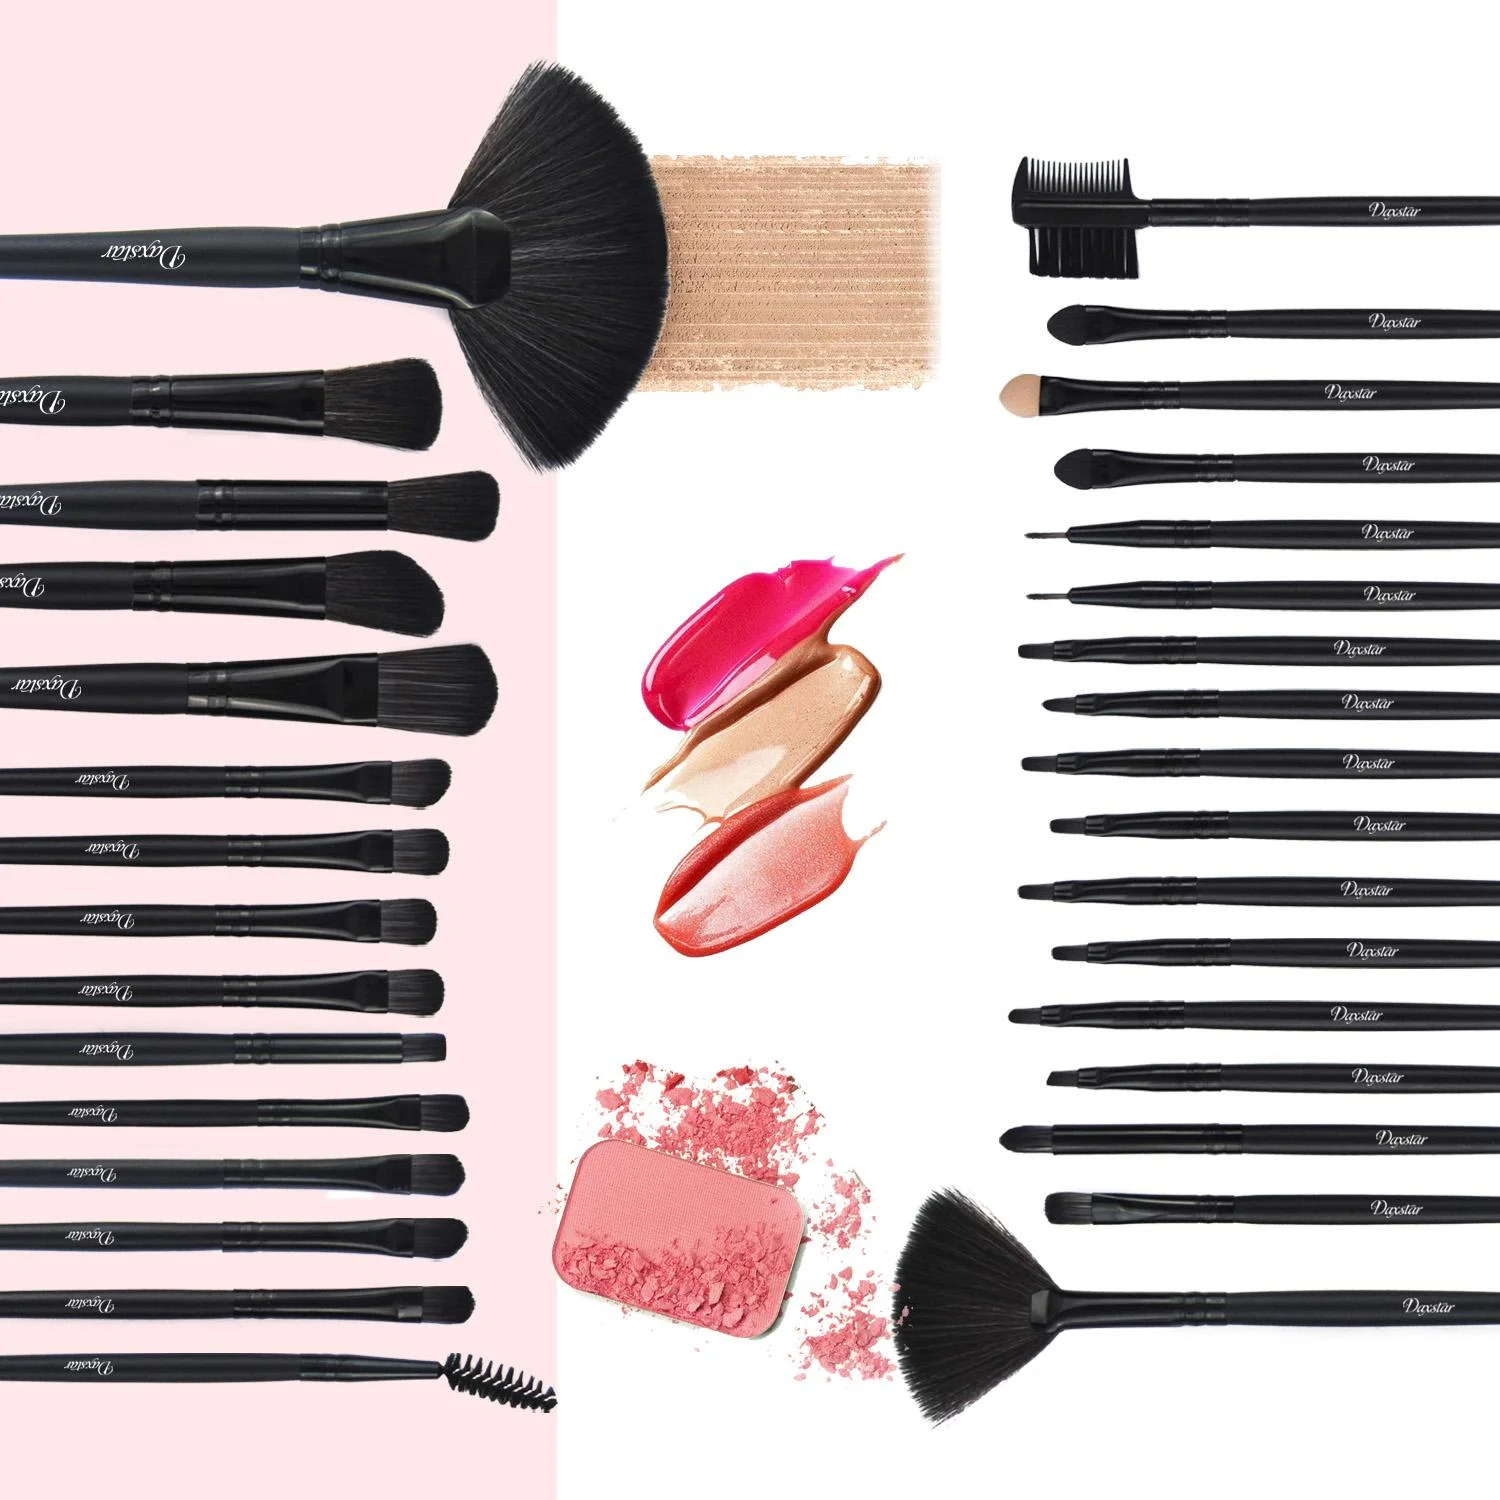 32 Sets Makeup Brushes